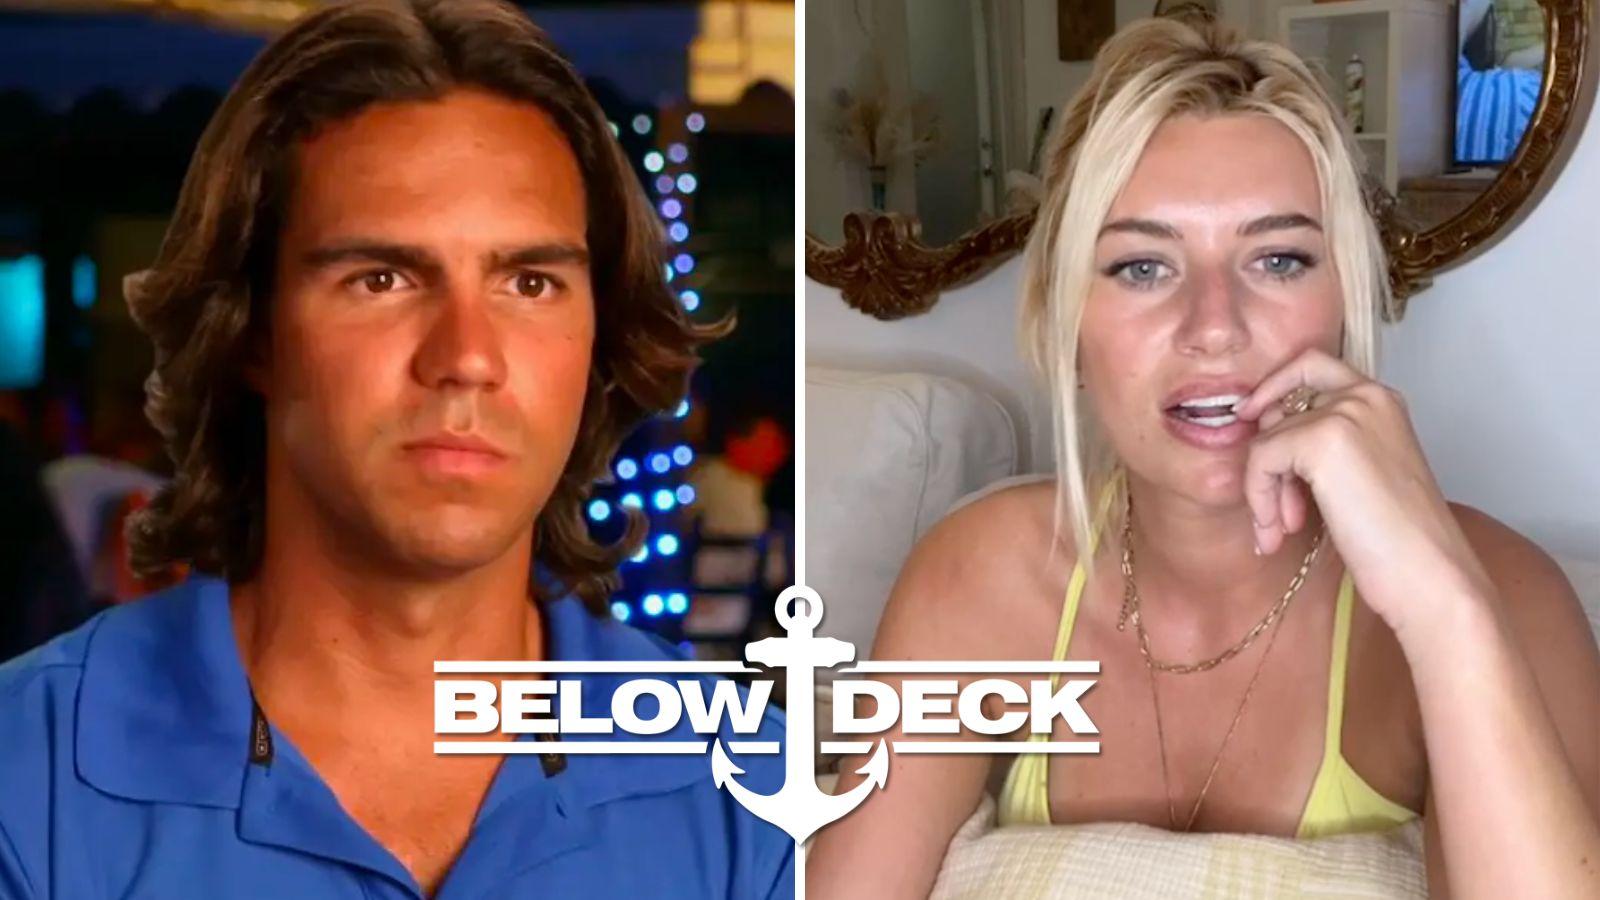 Below Deck’s Ben & Camille reveal relationship status after LeighAnn